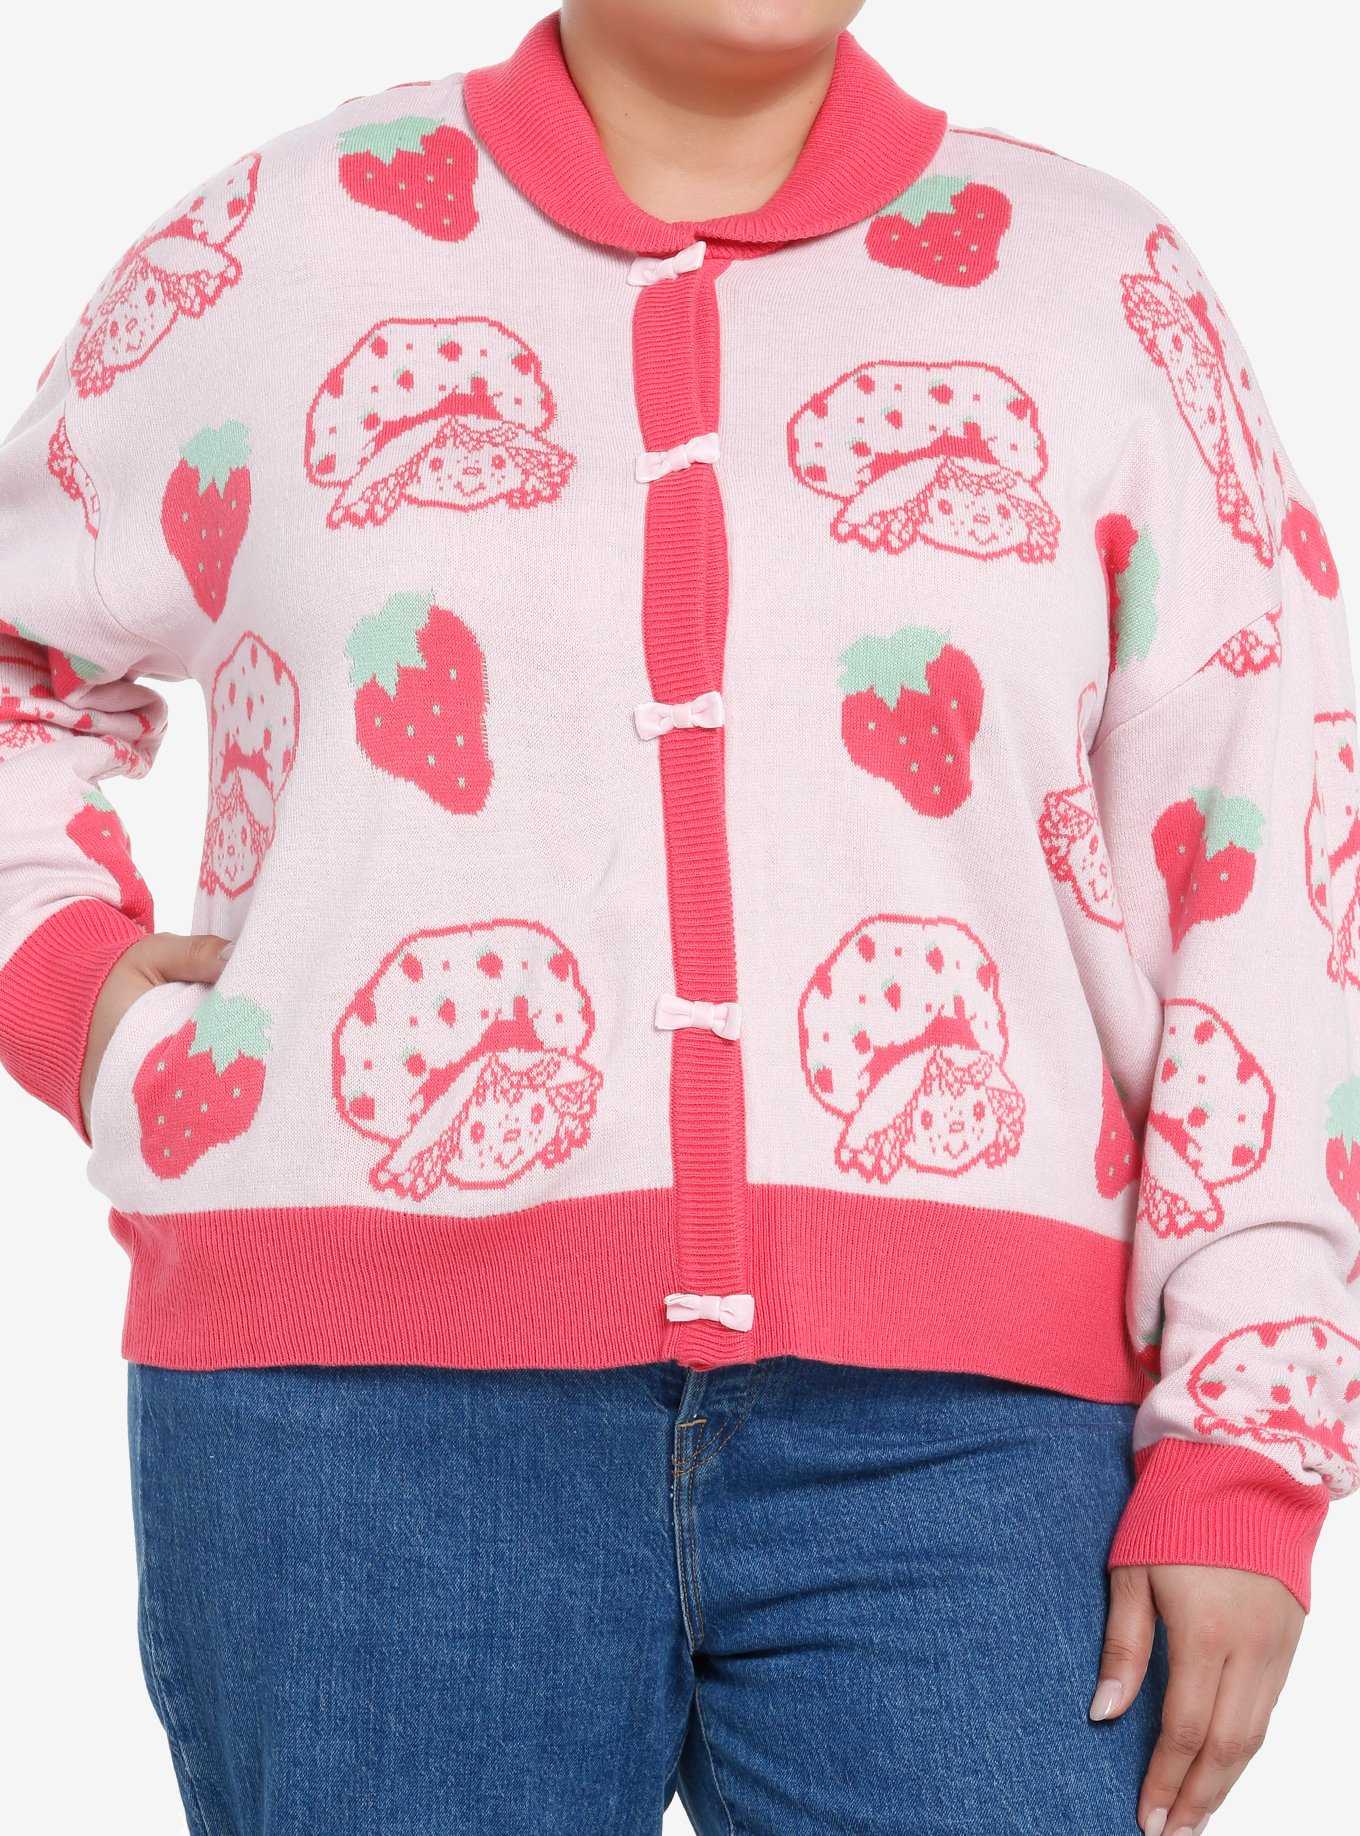 Strawberry Shortcake Bows Girls Collared Cardigan Plus Size, , hi-res